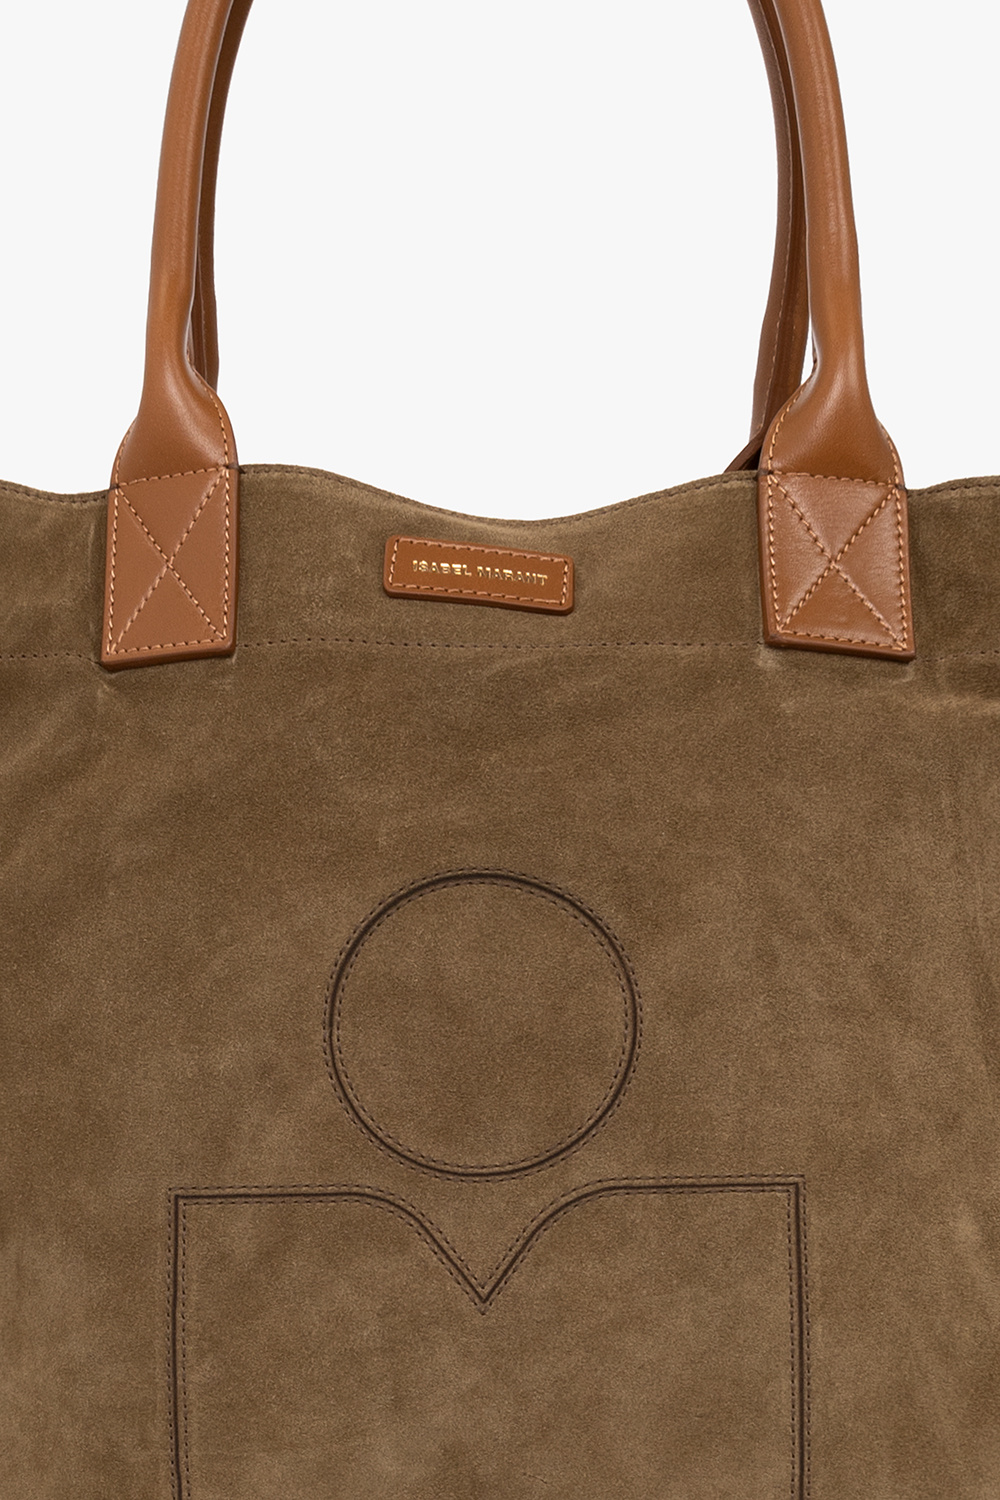 Isabel Marant ‘Yenky’ shopper Handtasche bag